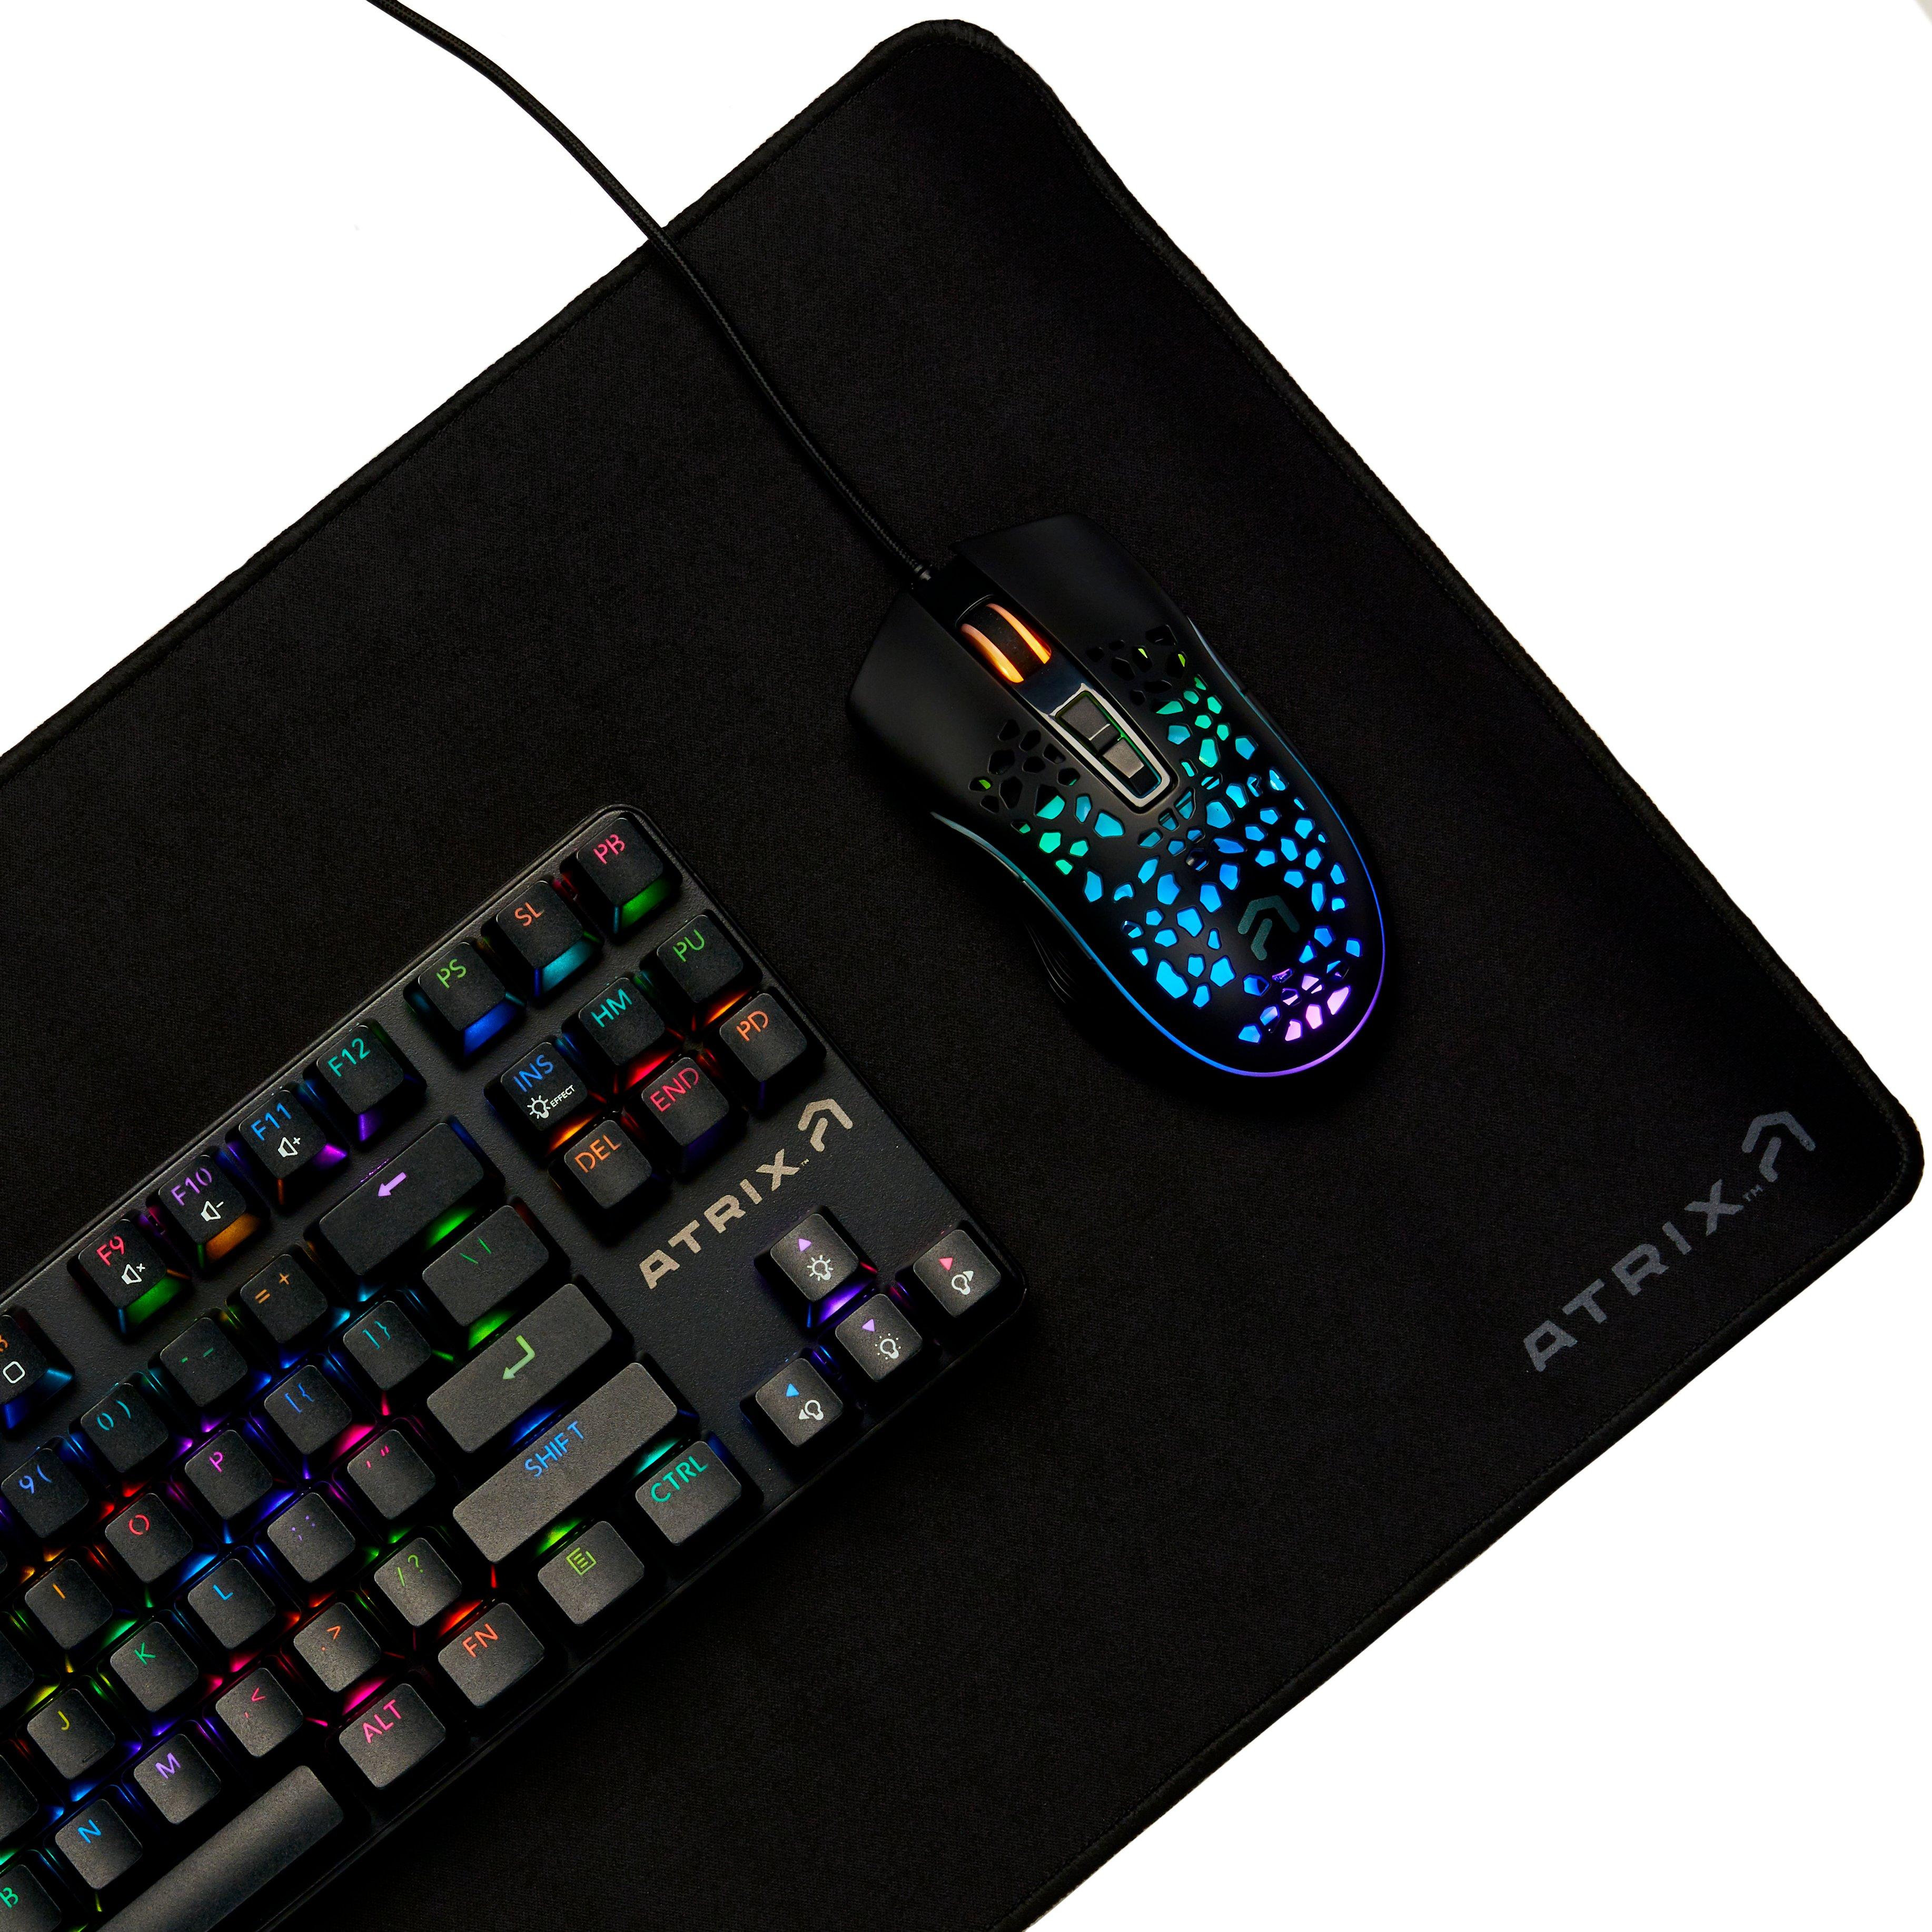 Atrix XXL Mouse Pad with RGB GameStop Exclusive | GameStop